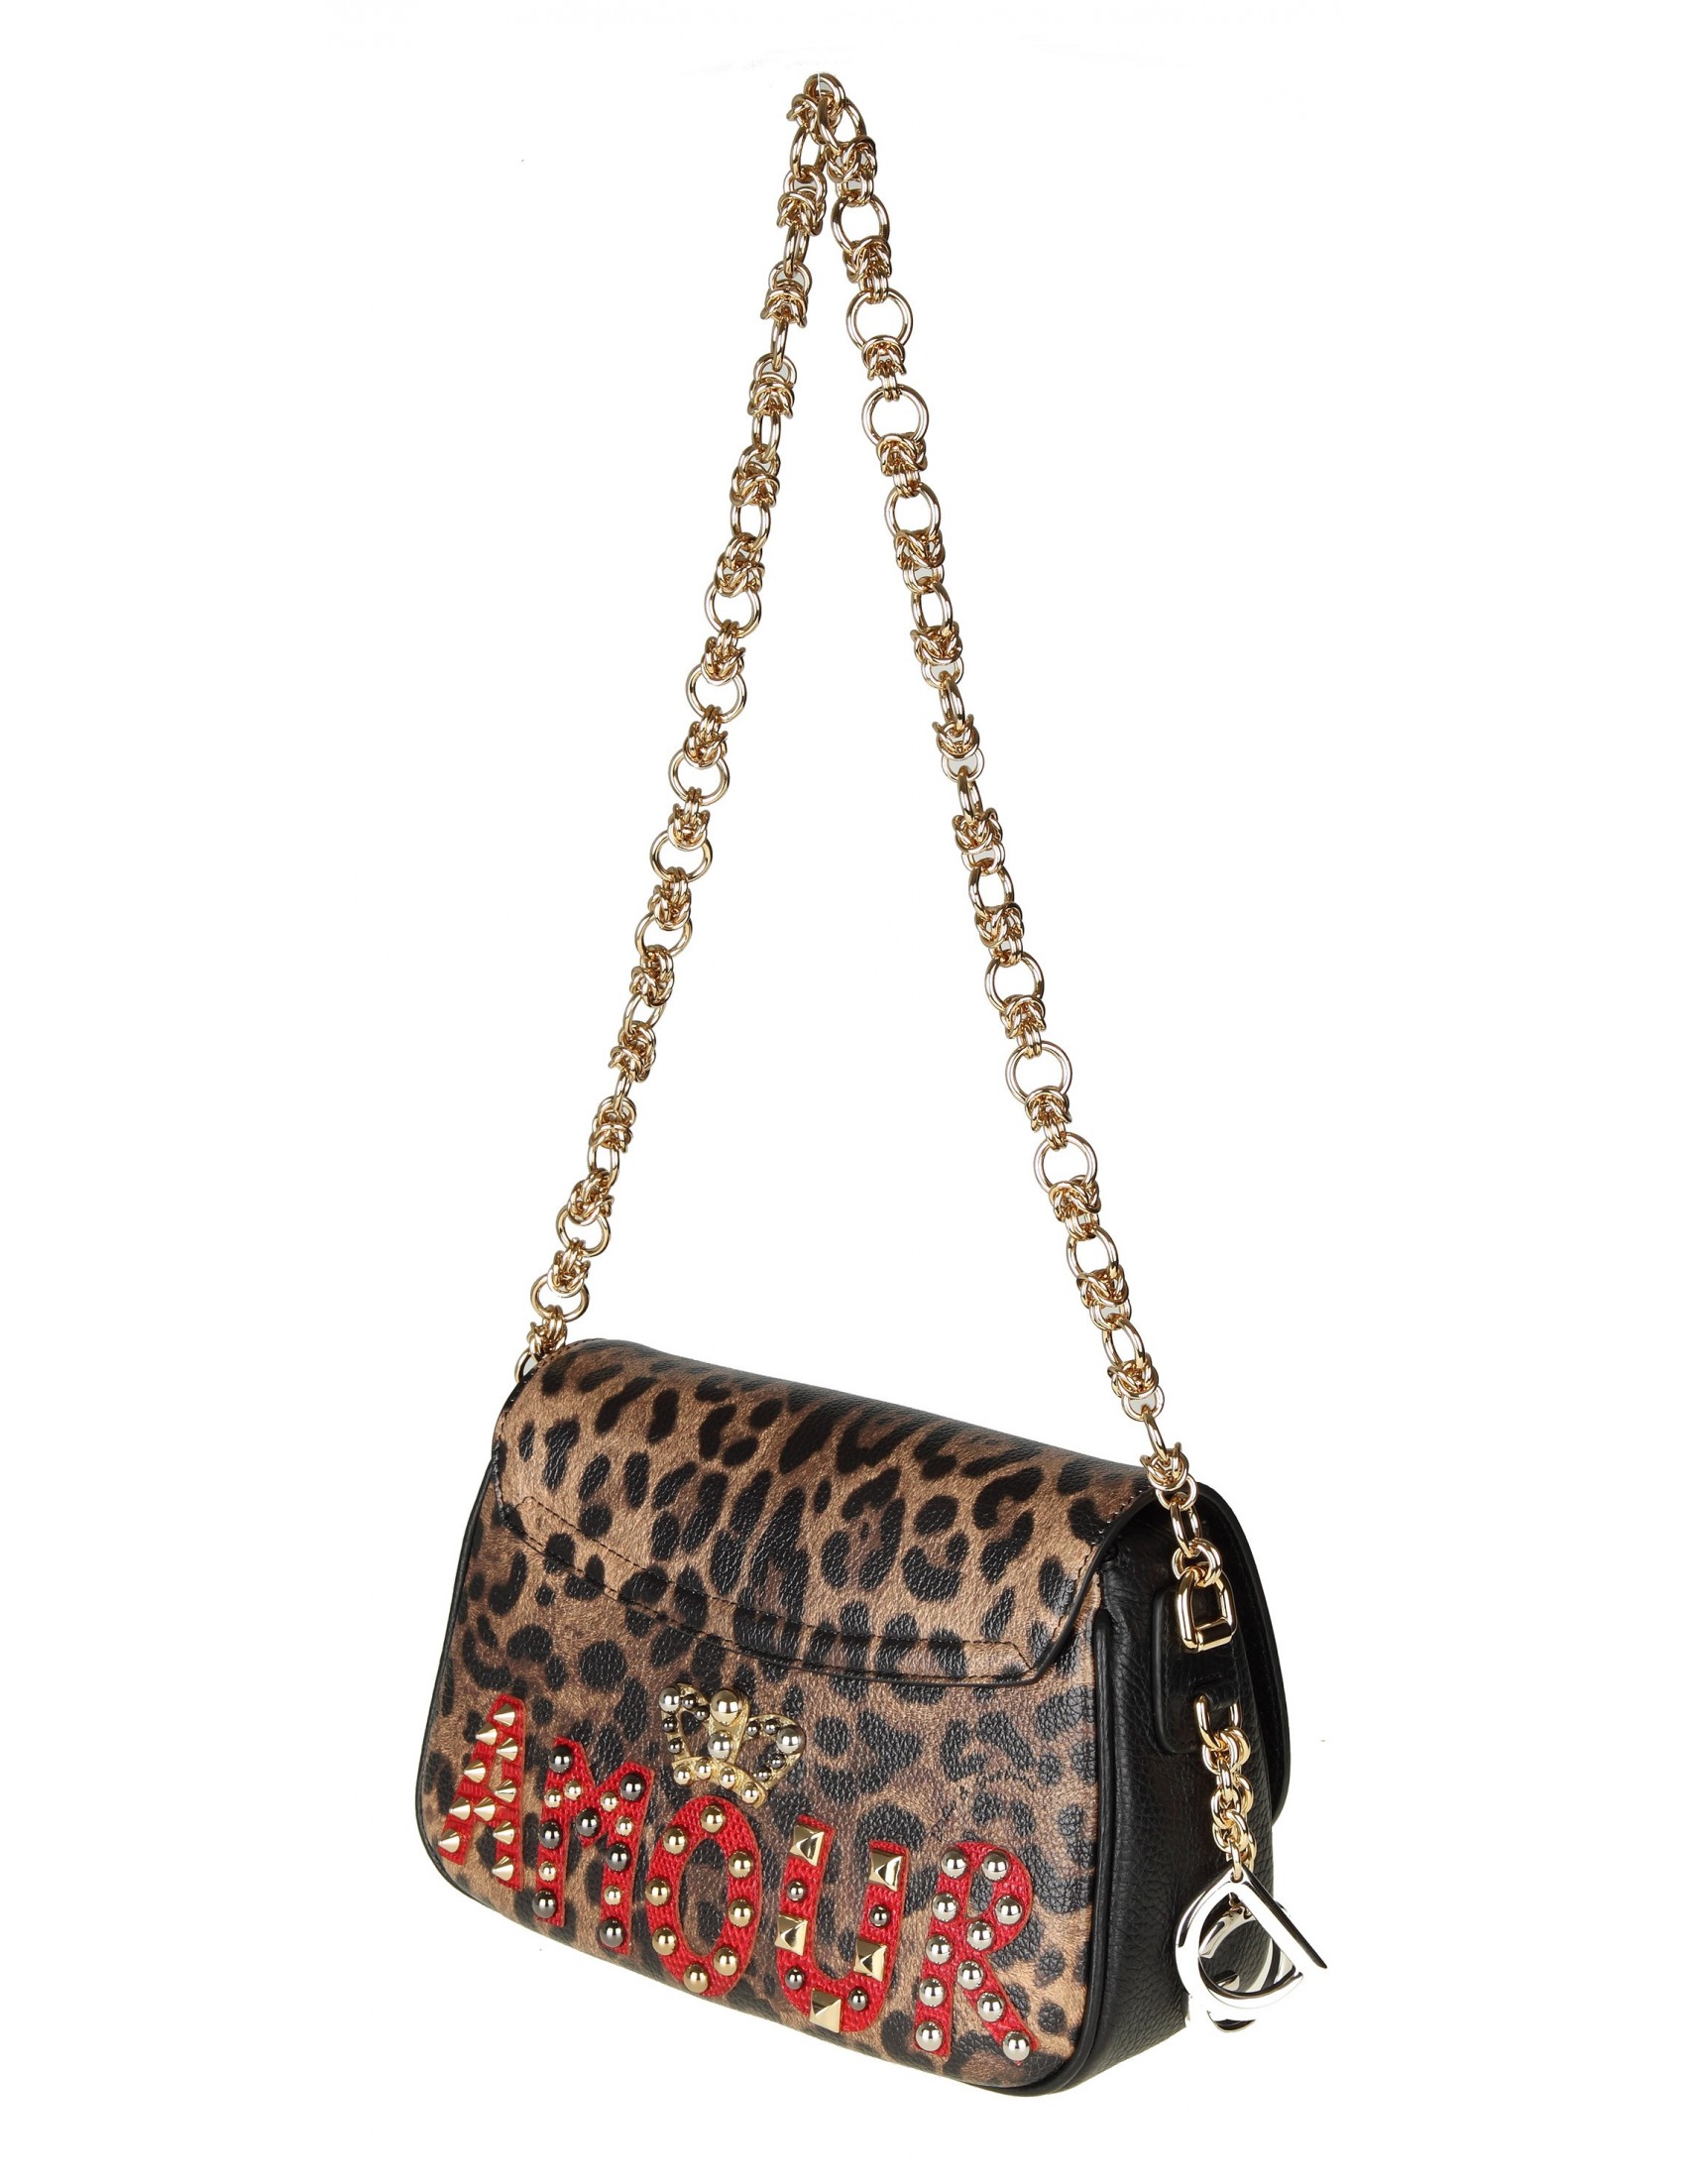 Dolce Gabbana Cat Bag | SEMA Data Co-op